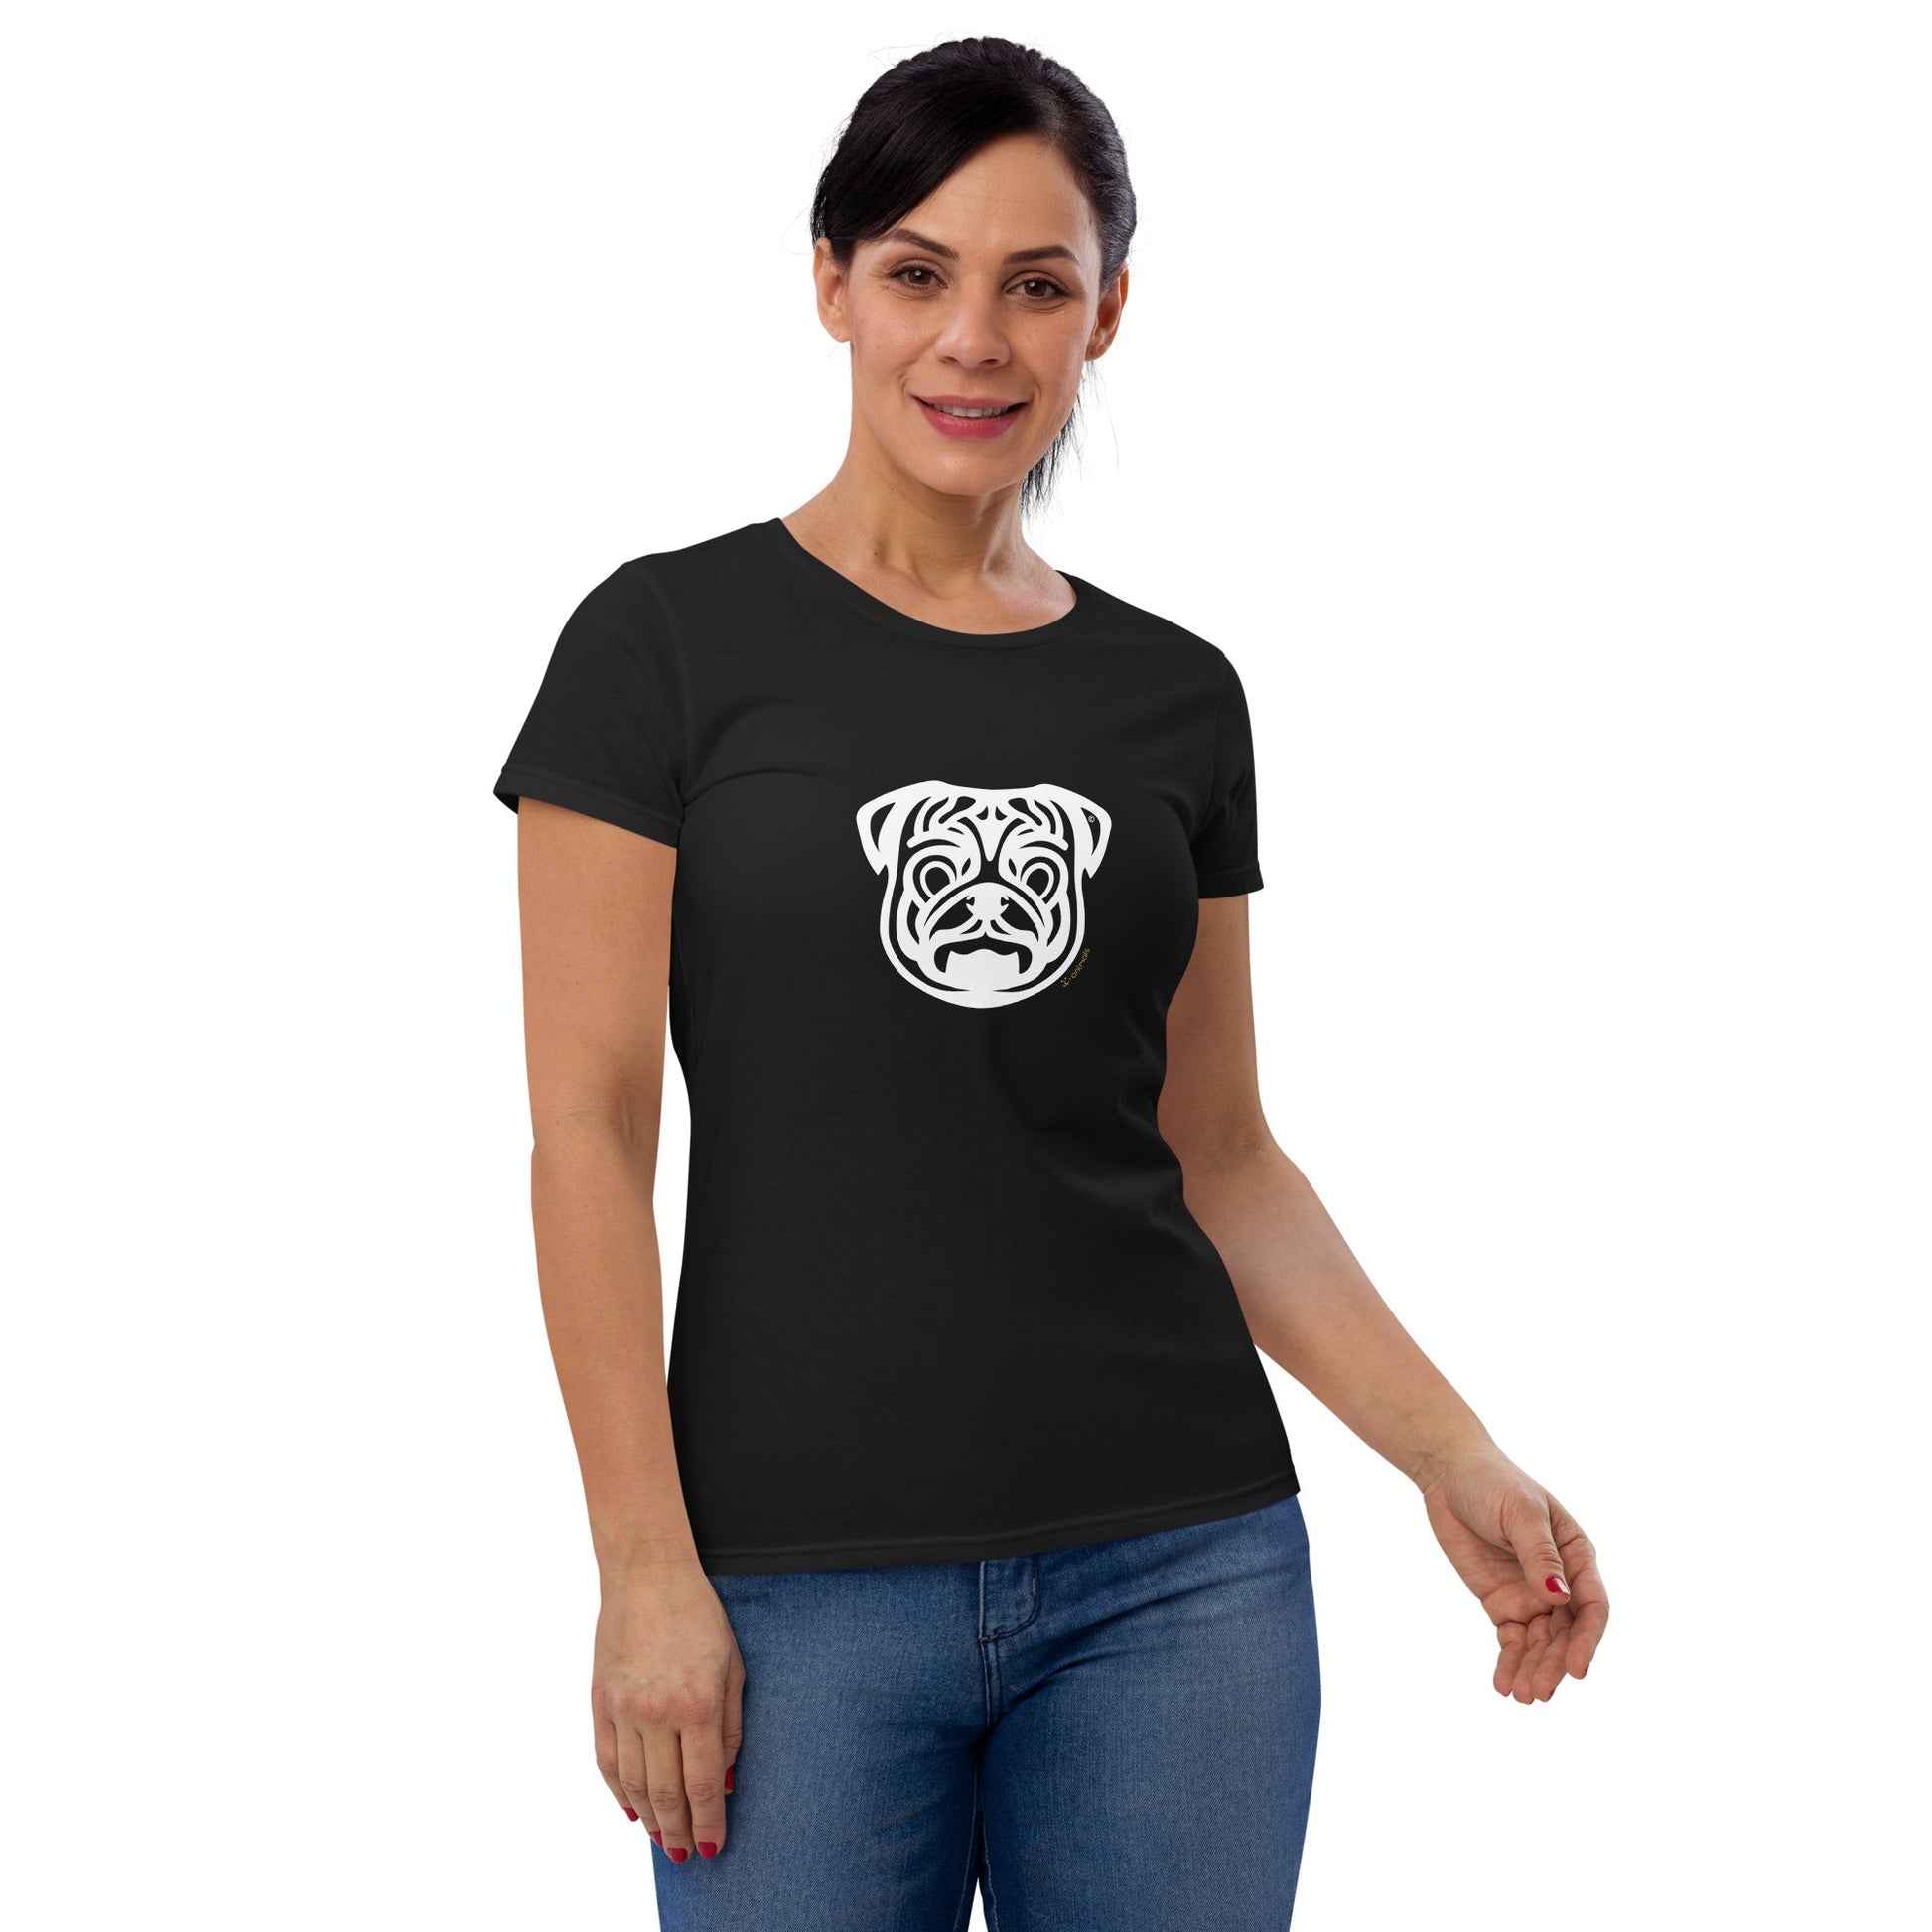 Camiseta feminina de manga curta - Pug - Tribal i-animals